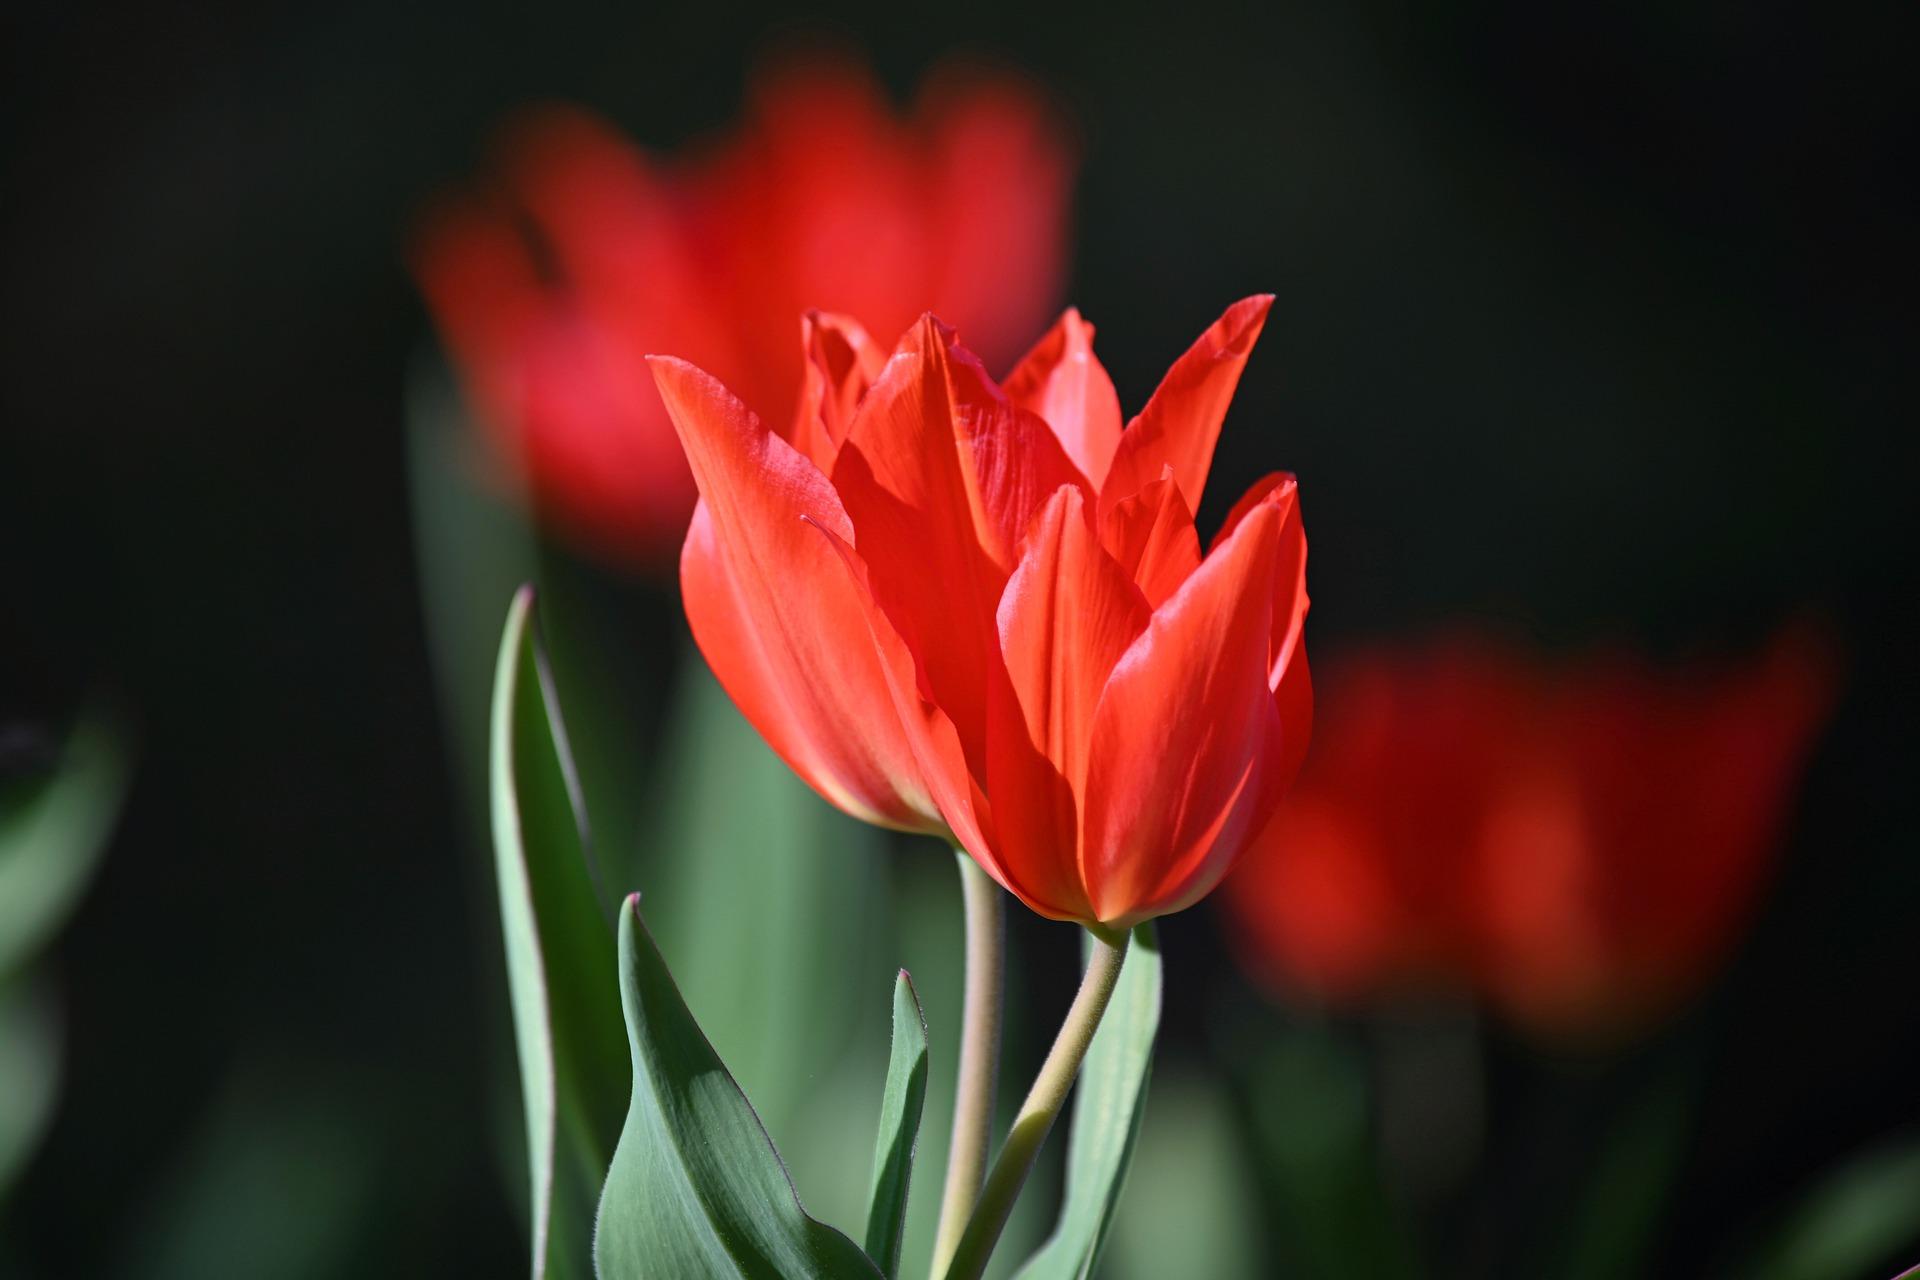 Tulip Bunchflowering 'Pr. Fusilier' - Tulip from Leo Berbee Bulb Company